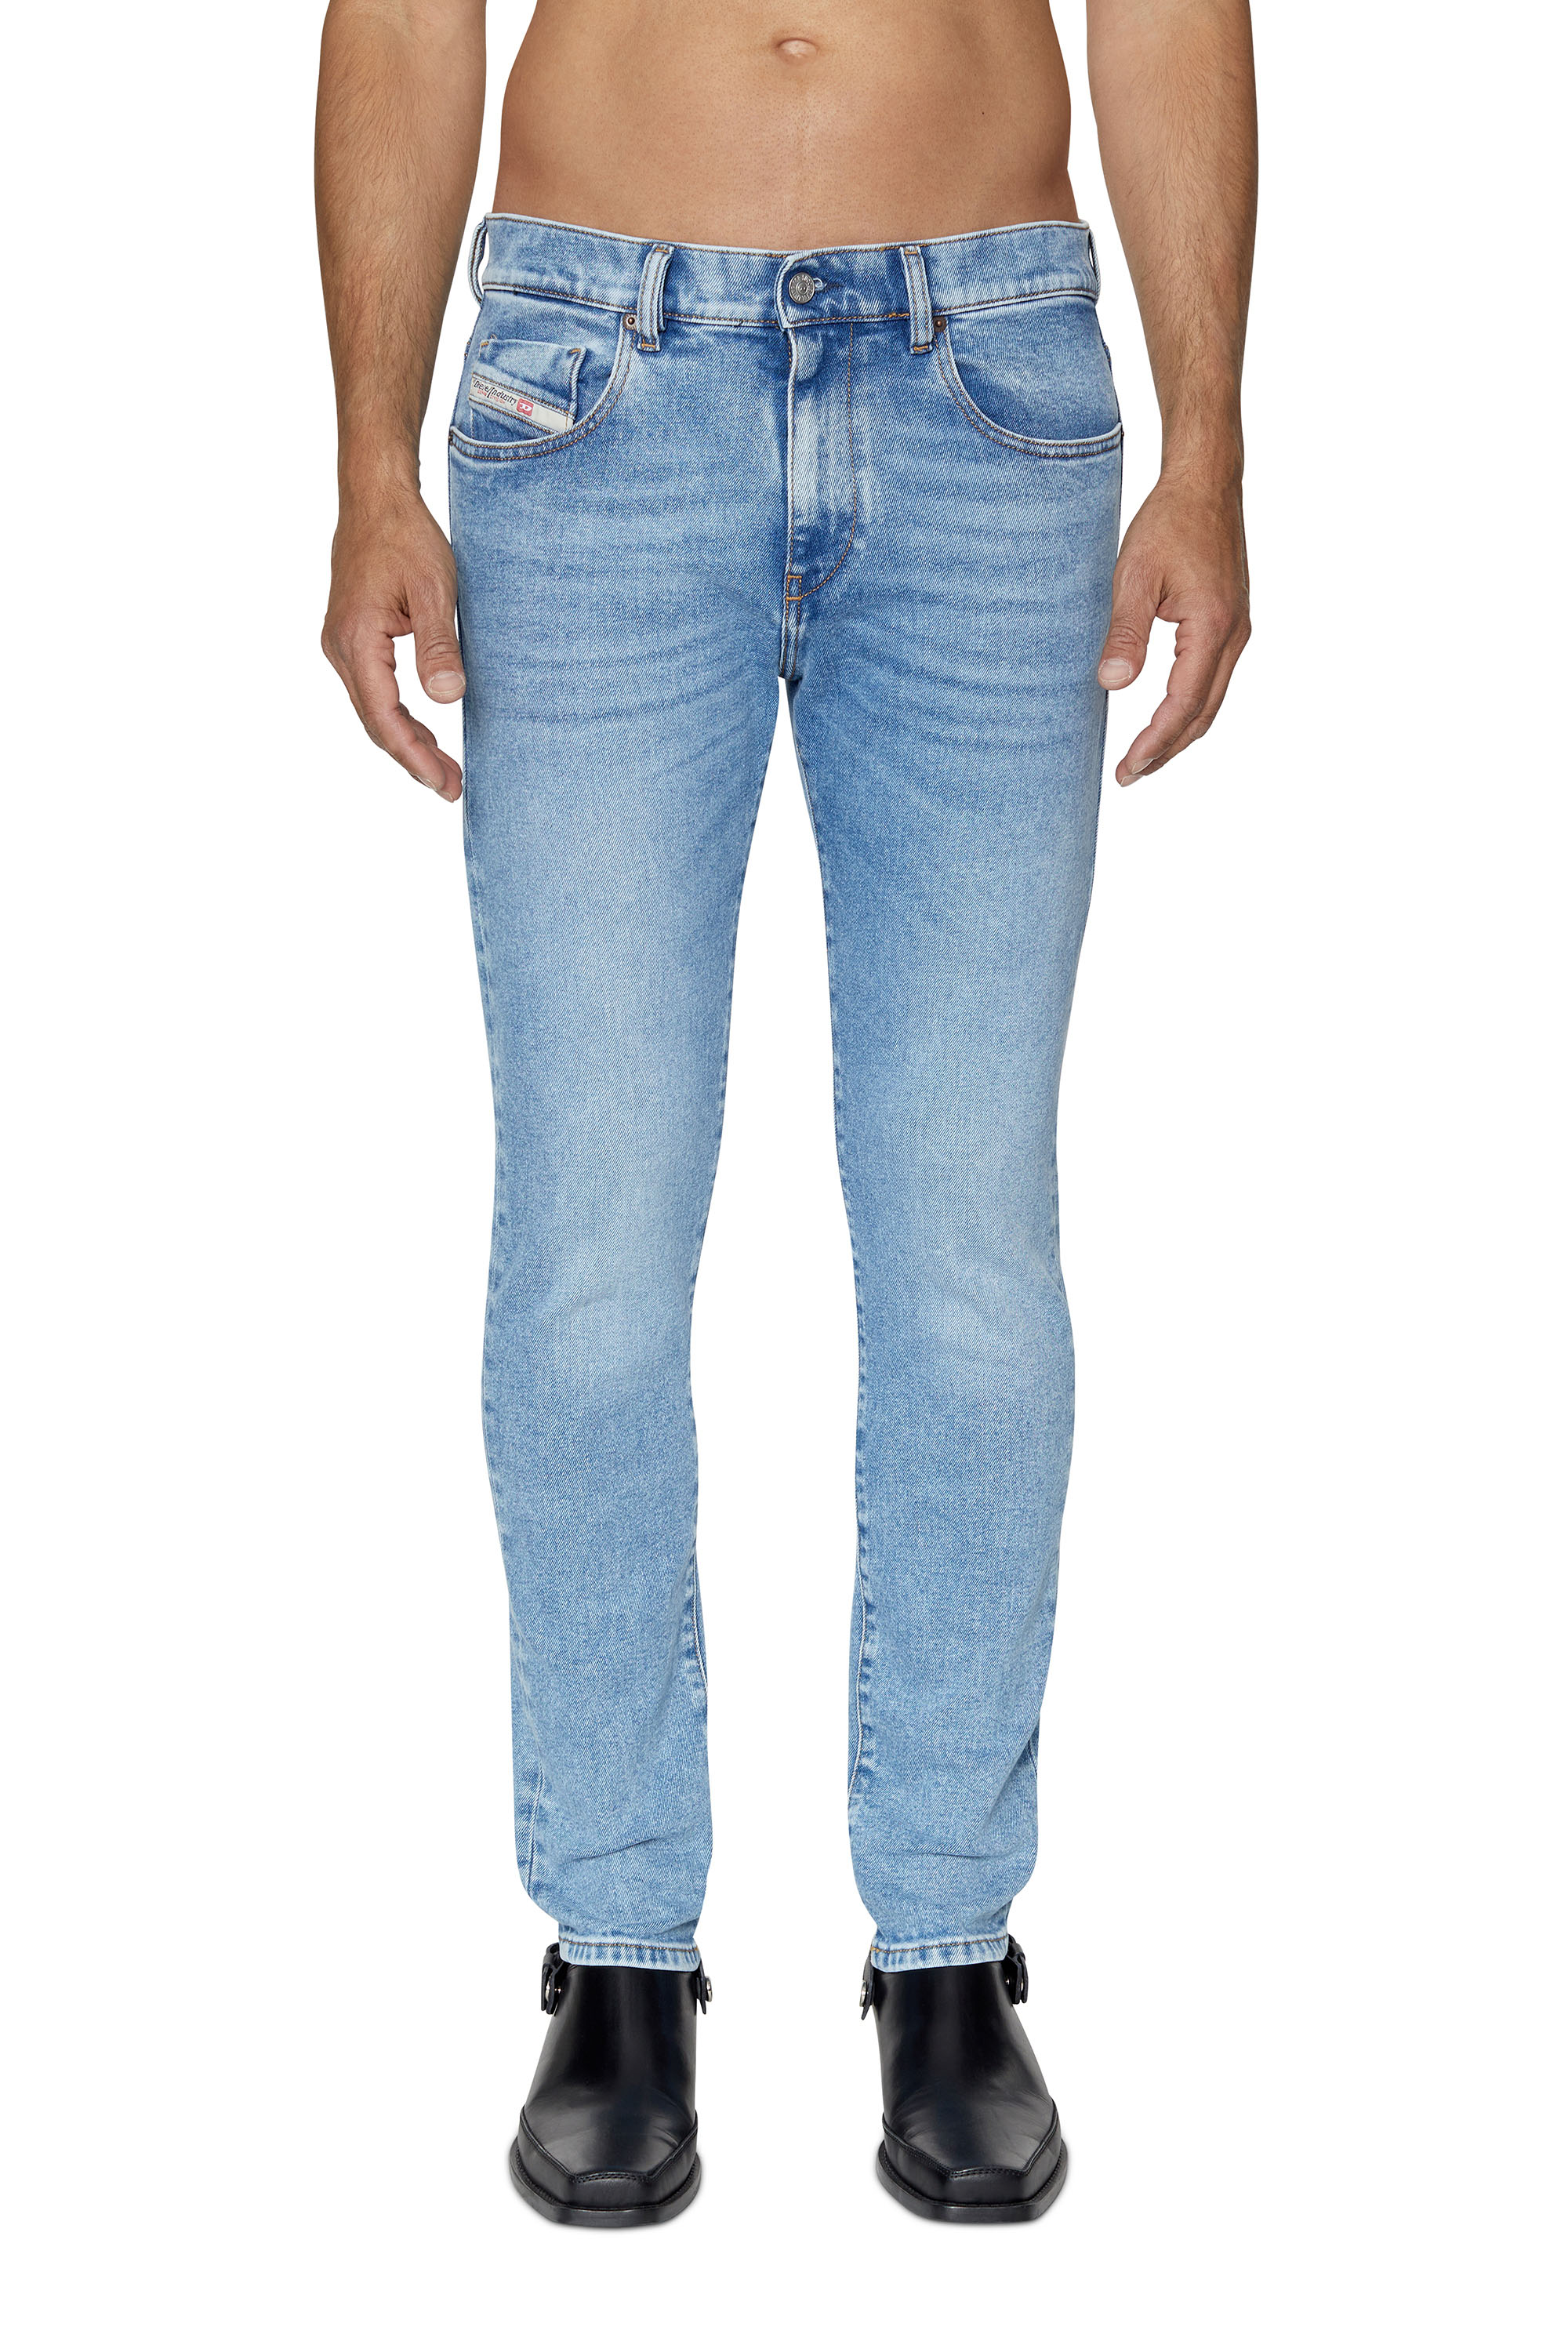 DIESEL Denim Thommar 009je Slim Jeans in Blue for Men Mens Clothing Jeans Slim jeans Save 15% 